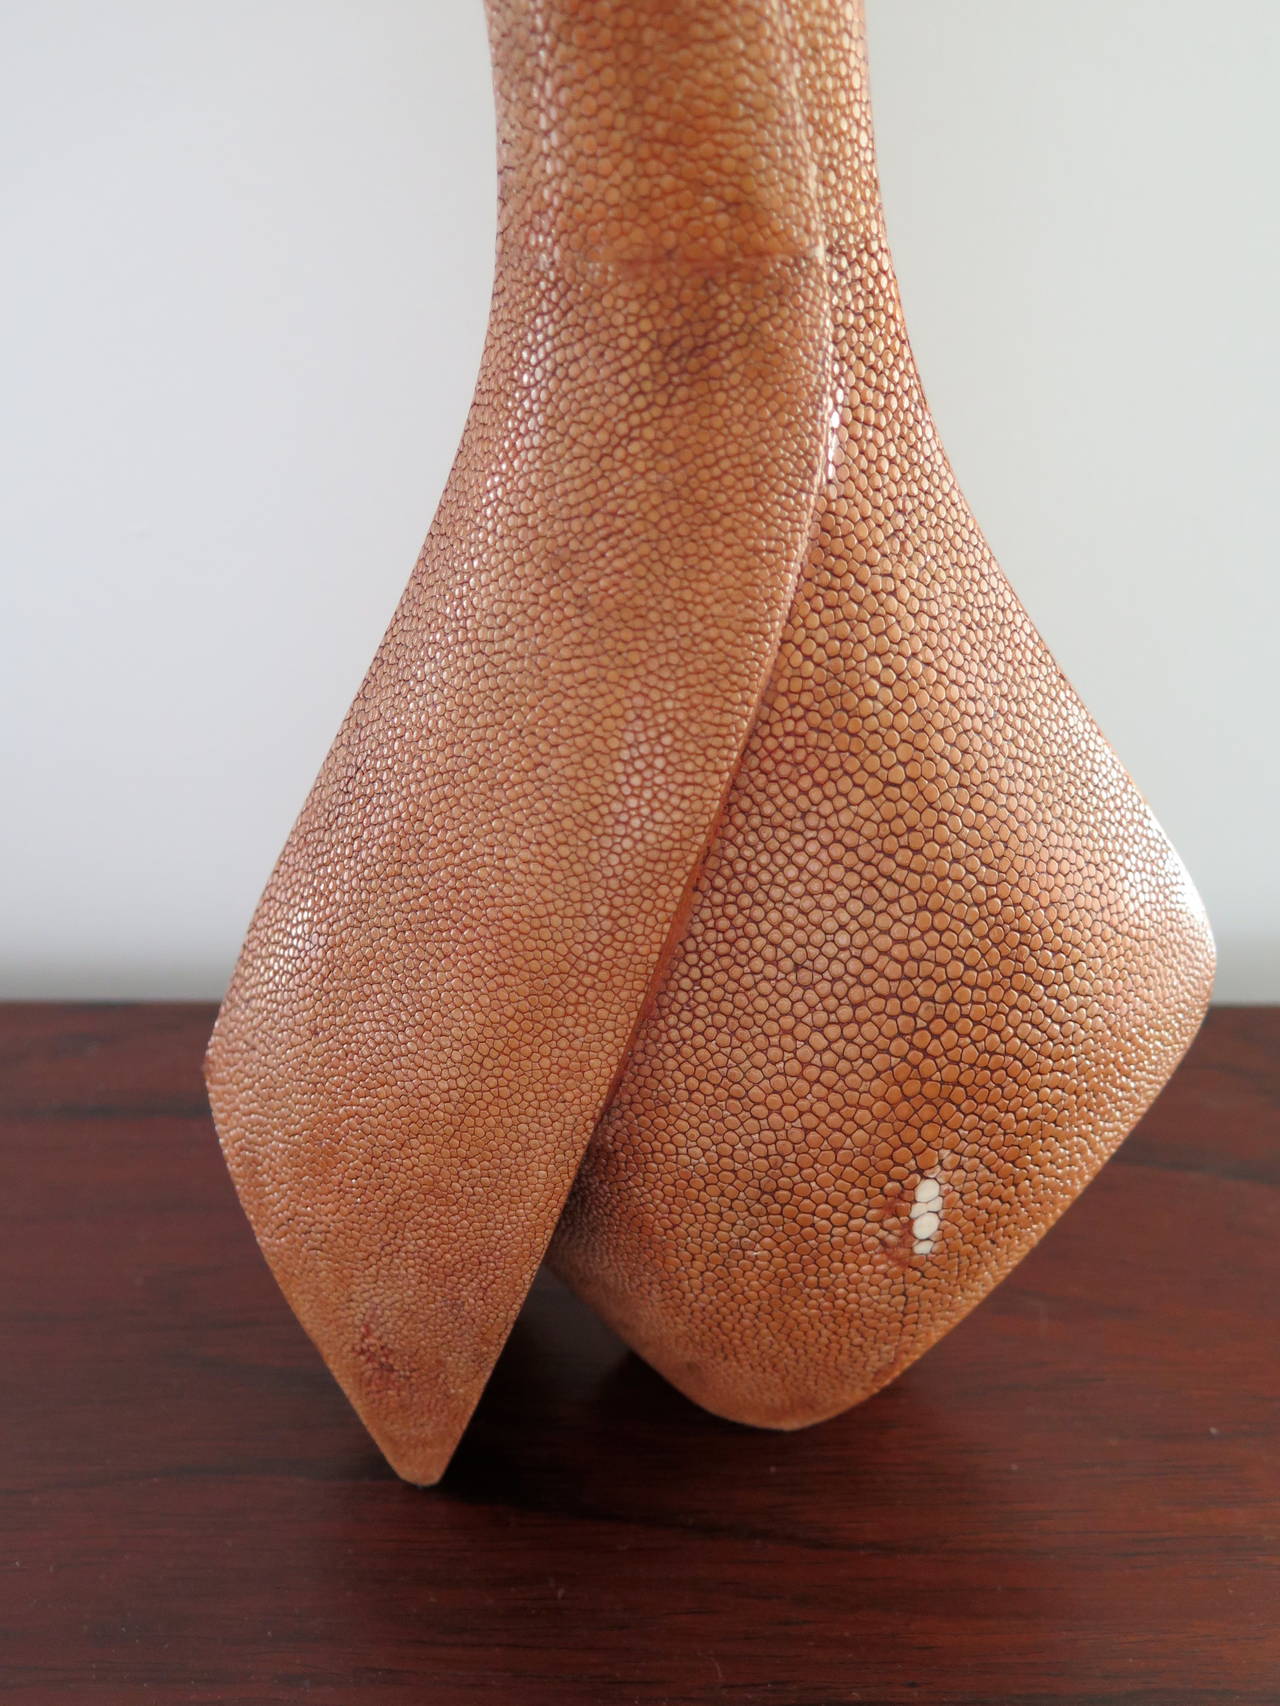 An elegant, sculptural vase in galuchat by R & Y Augousti.